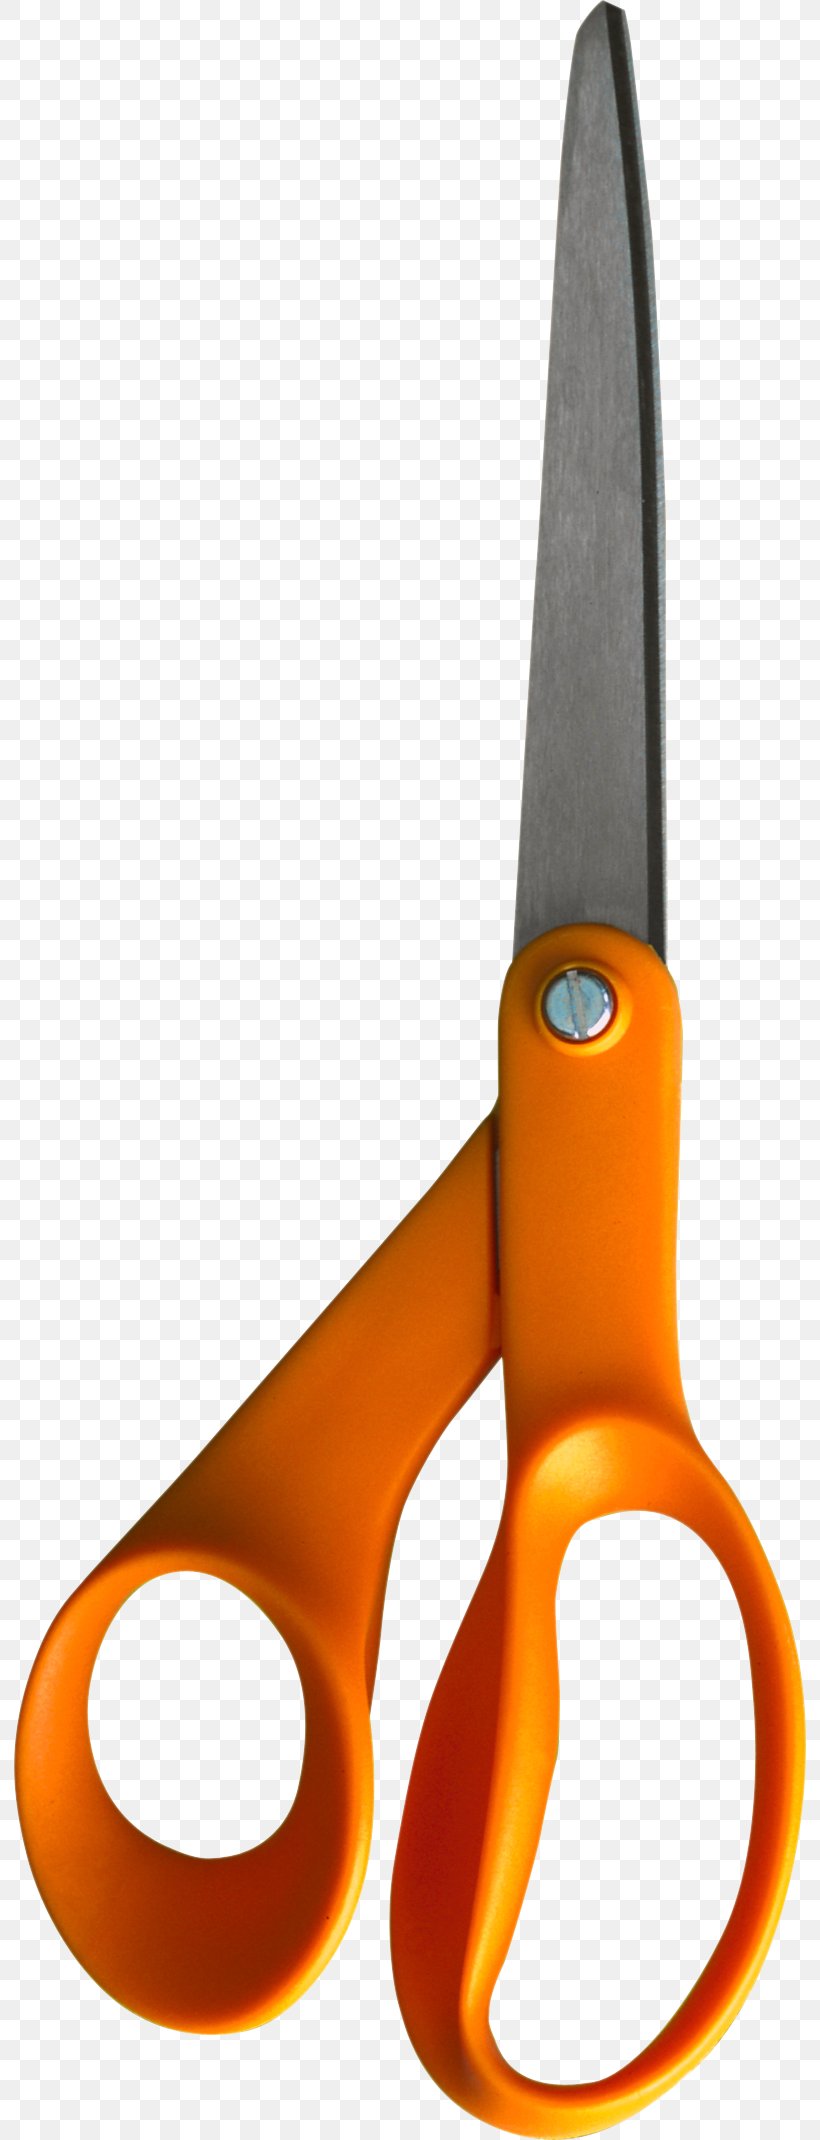 Scissors Download Clip Art, PNG, 792x2140px, Scissors, Digital Image, Hair Cutting Shears, Idea, Orange Download Free